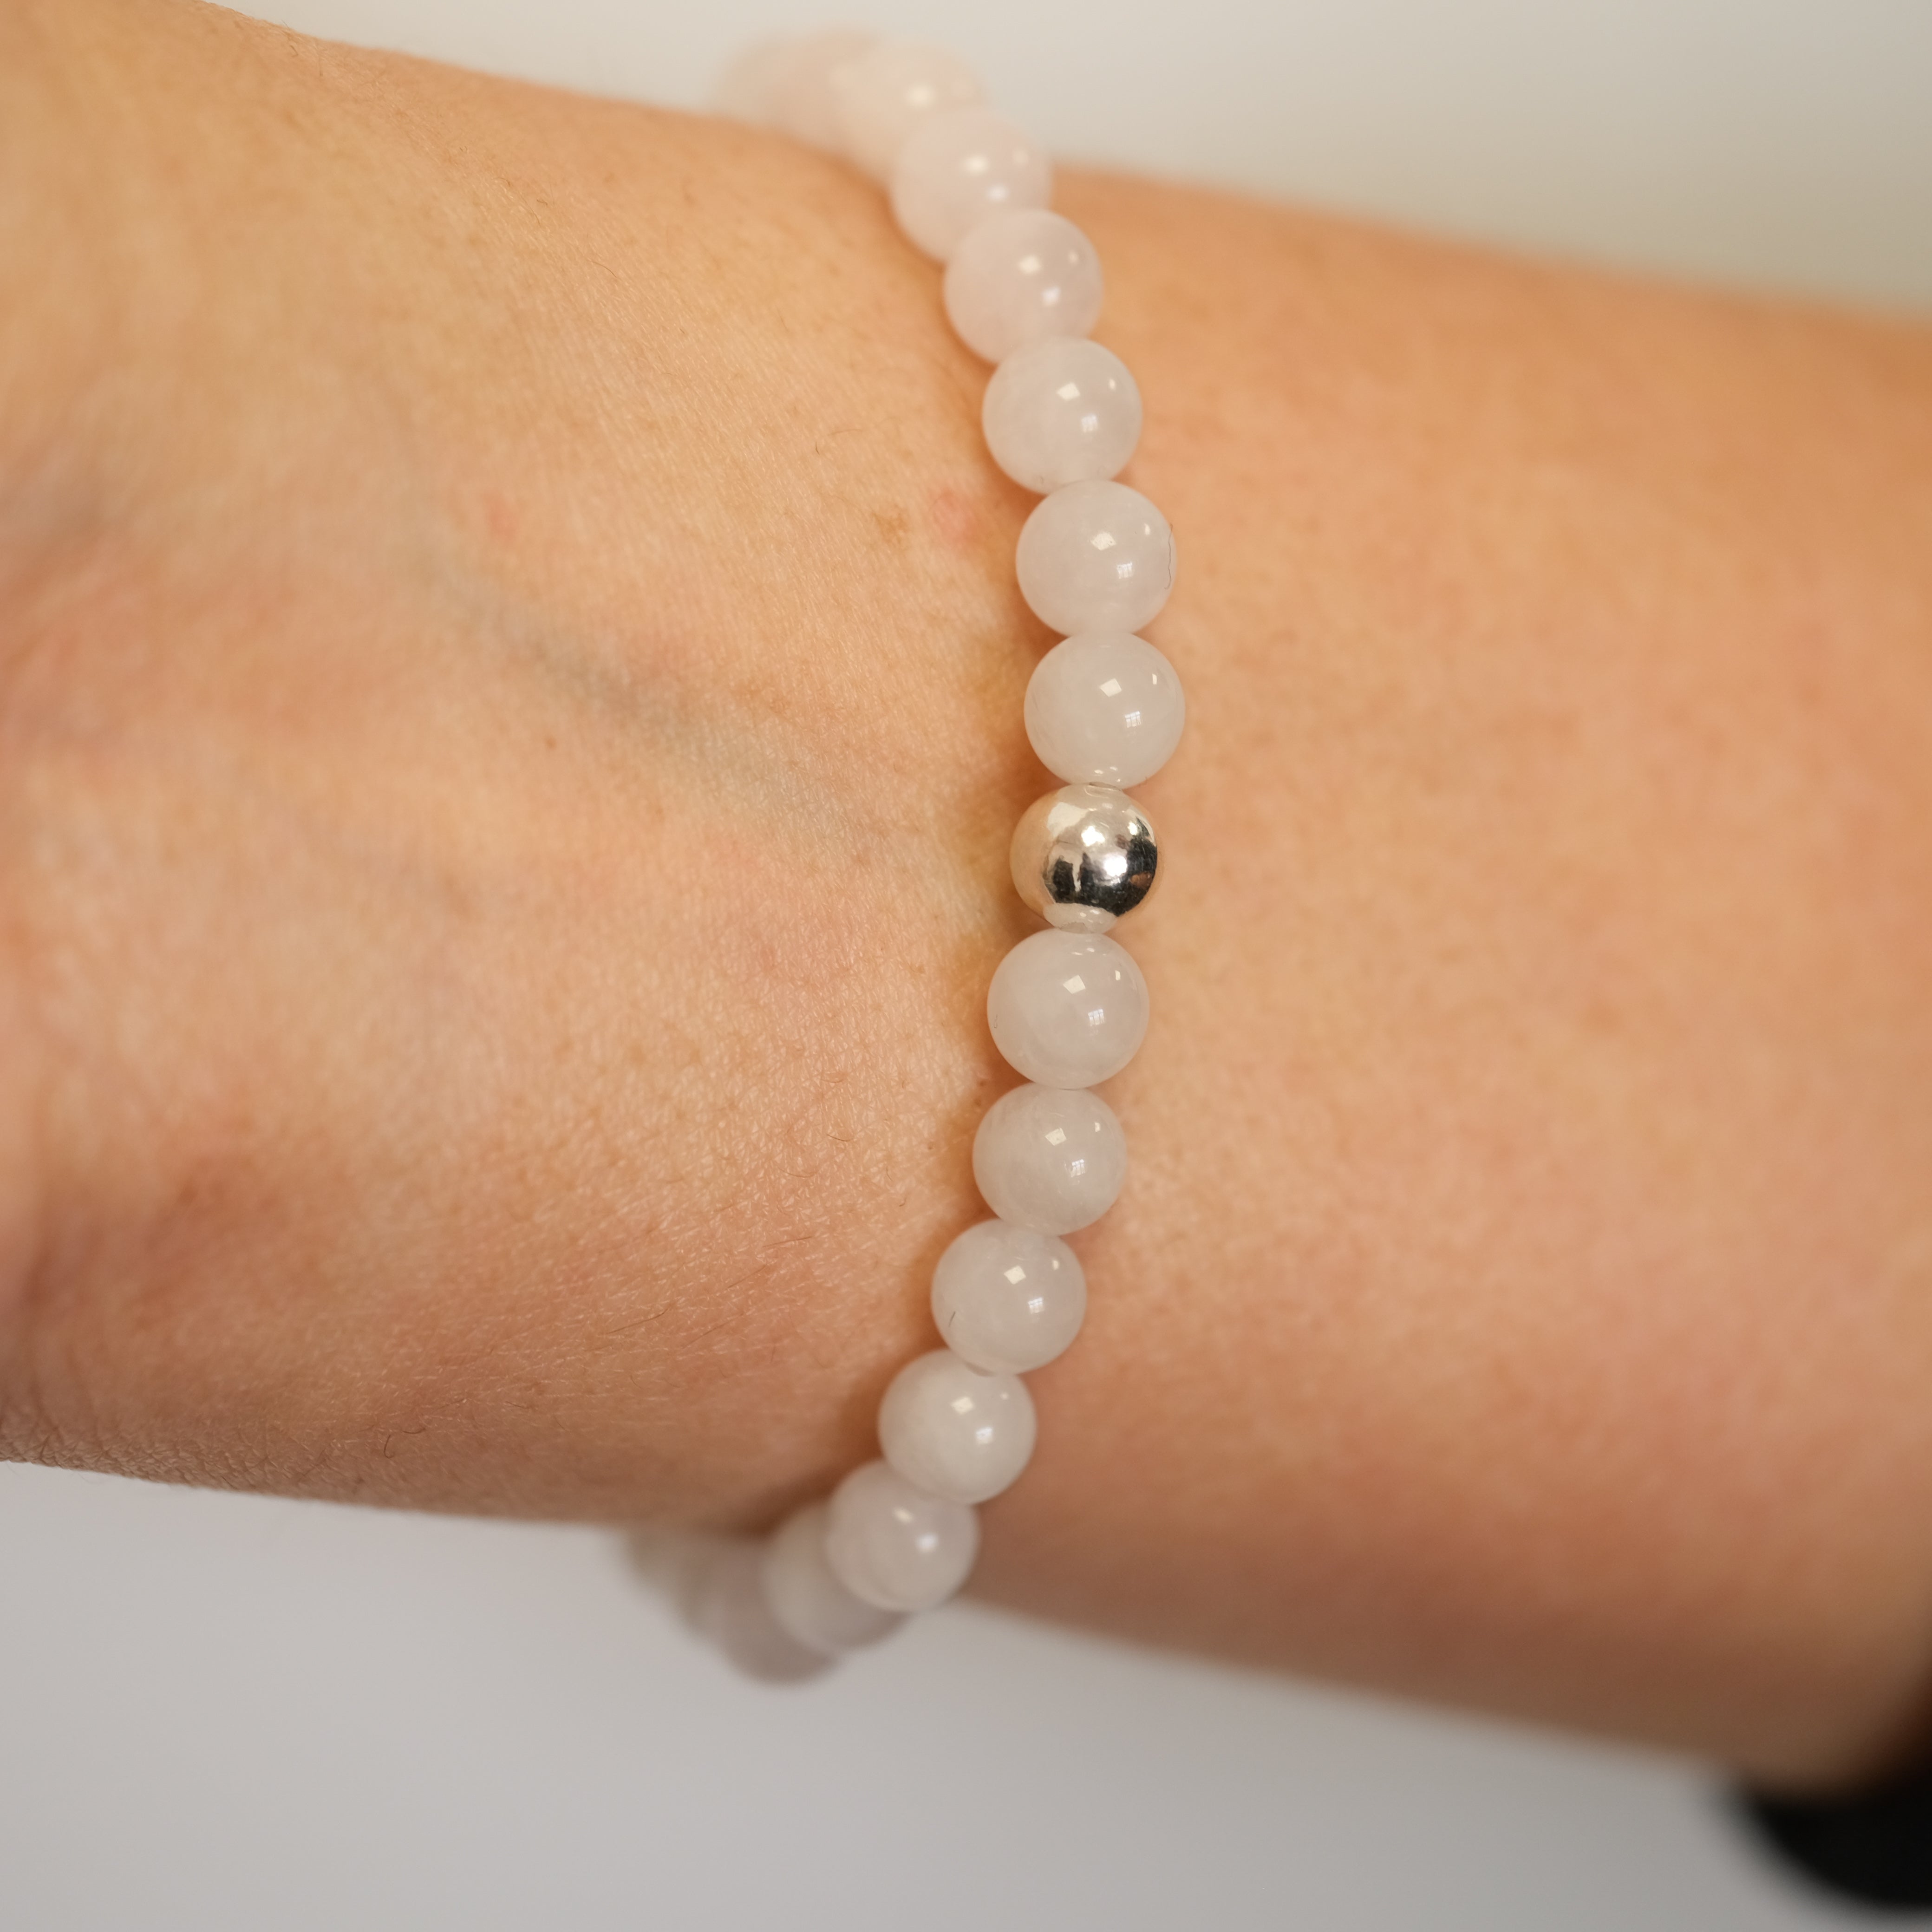 Rose Quartz gemstone bracelet worn on a model's wrist from behind